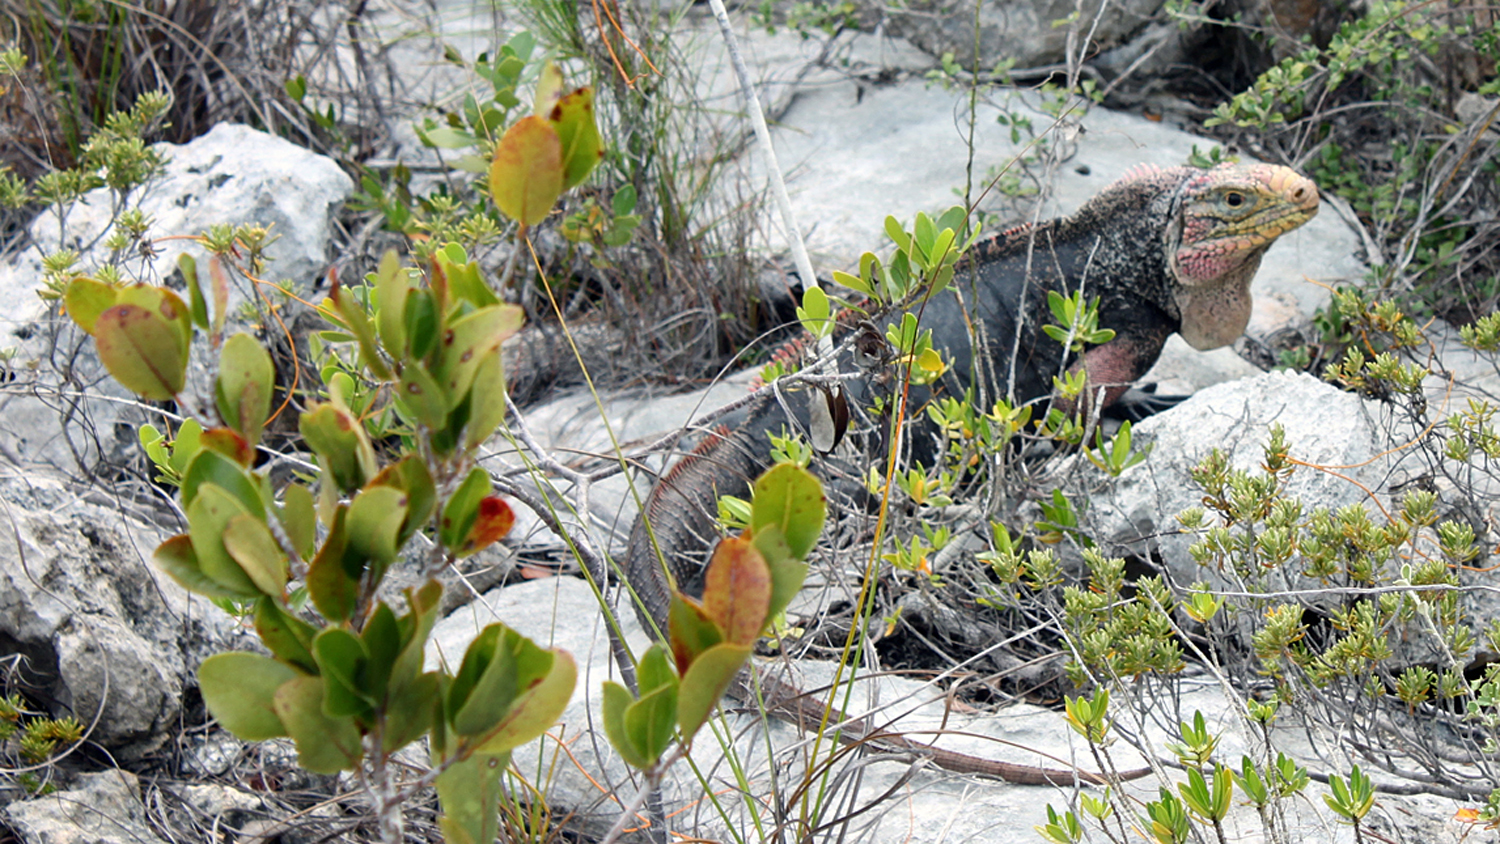 Iguana on rock in the Bahamas